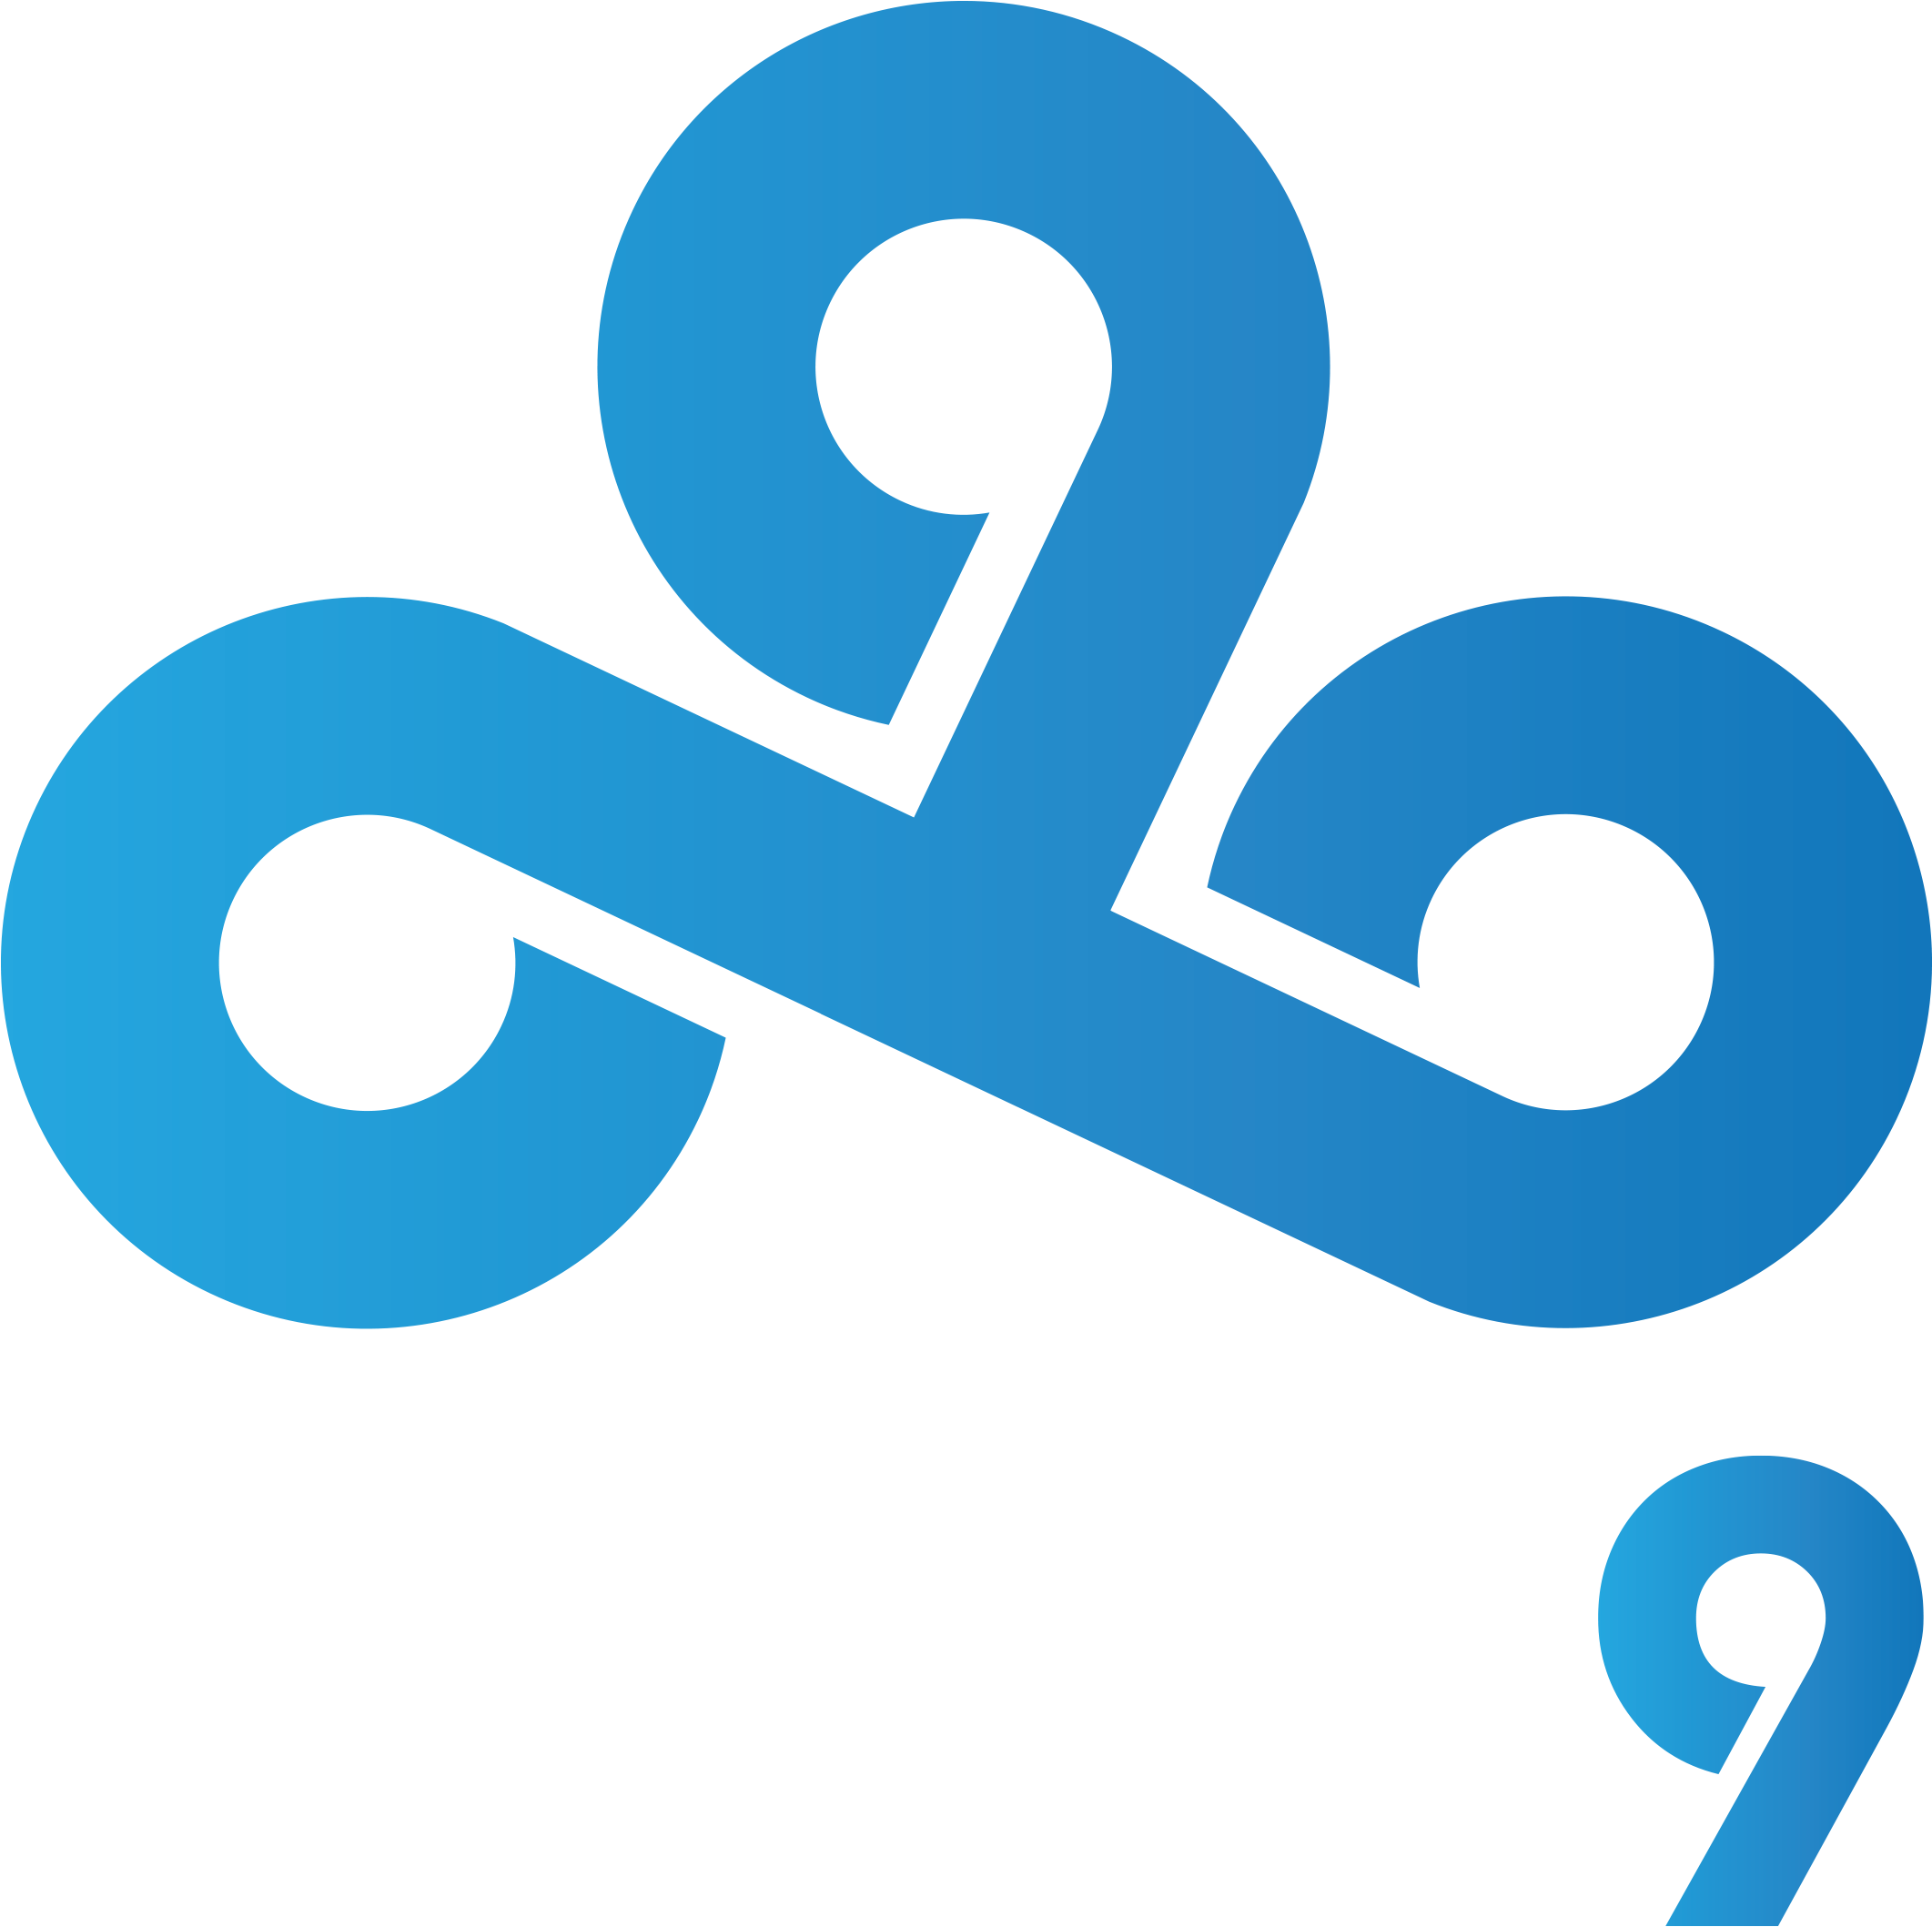 Cloud9 - Cloud 9 Logo Png (567x567), Png Download